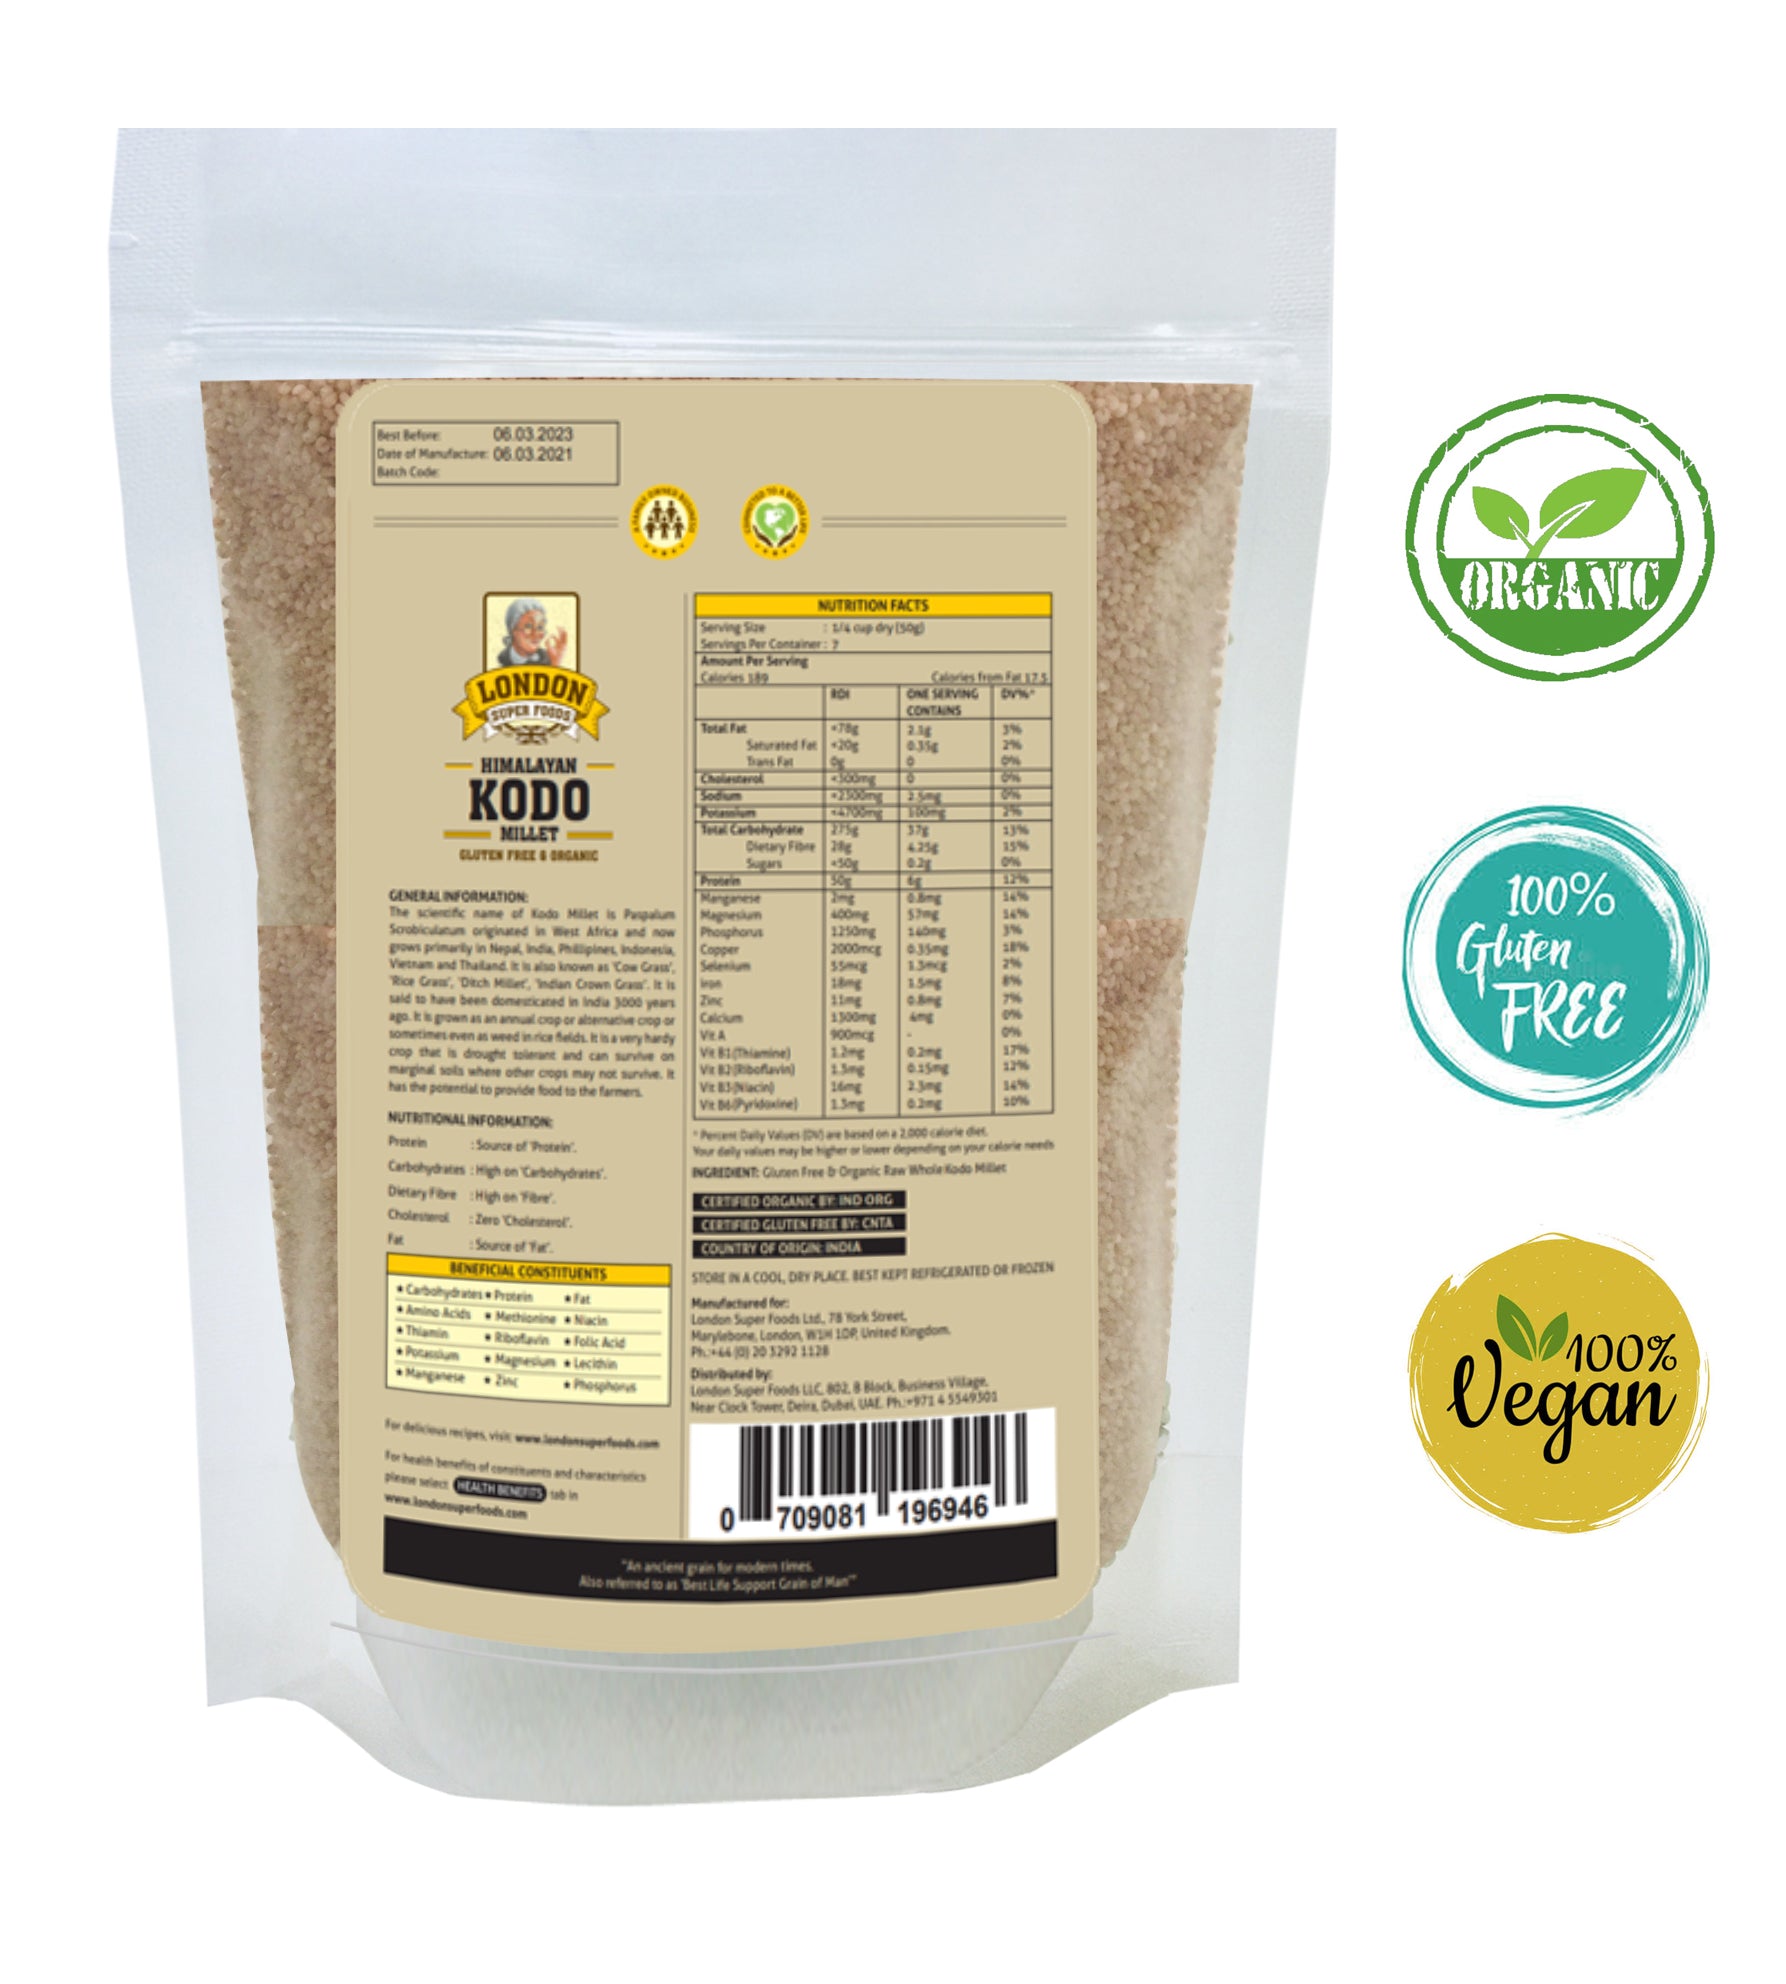 LONDON SUPER FOODS Himalayan Organic Kodo Millet, 350g - Gluten Free